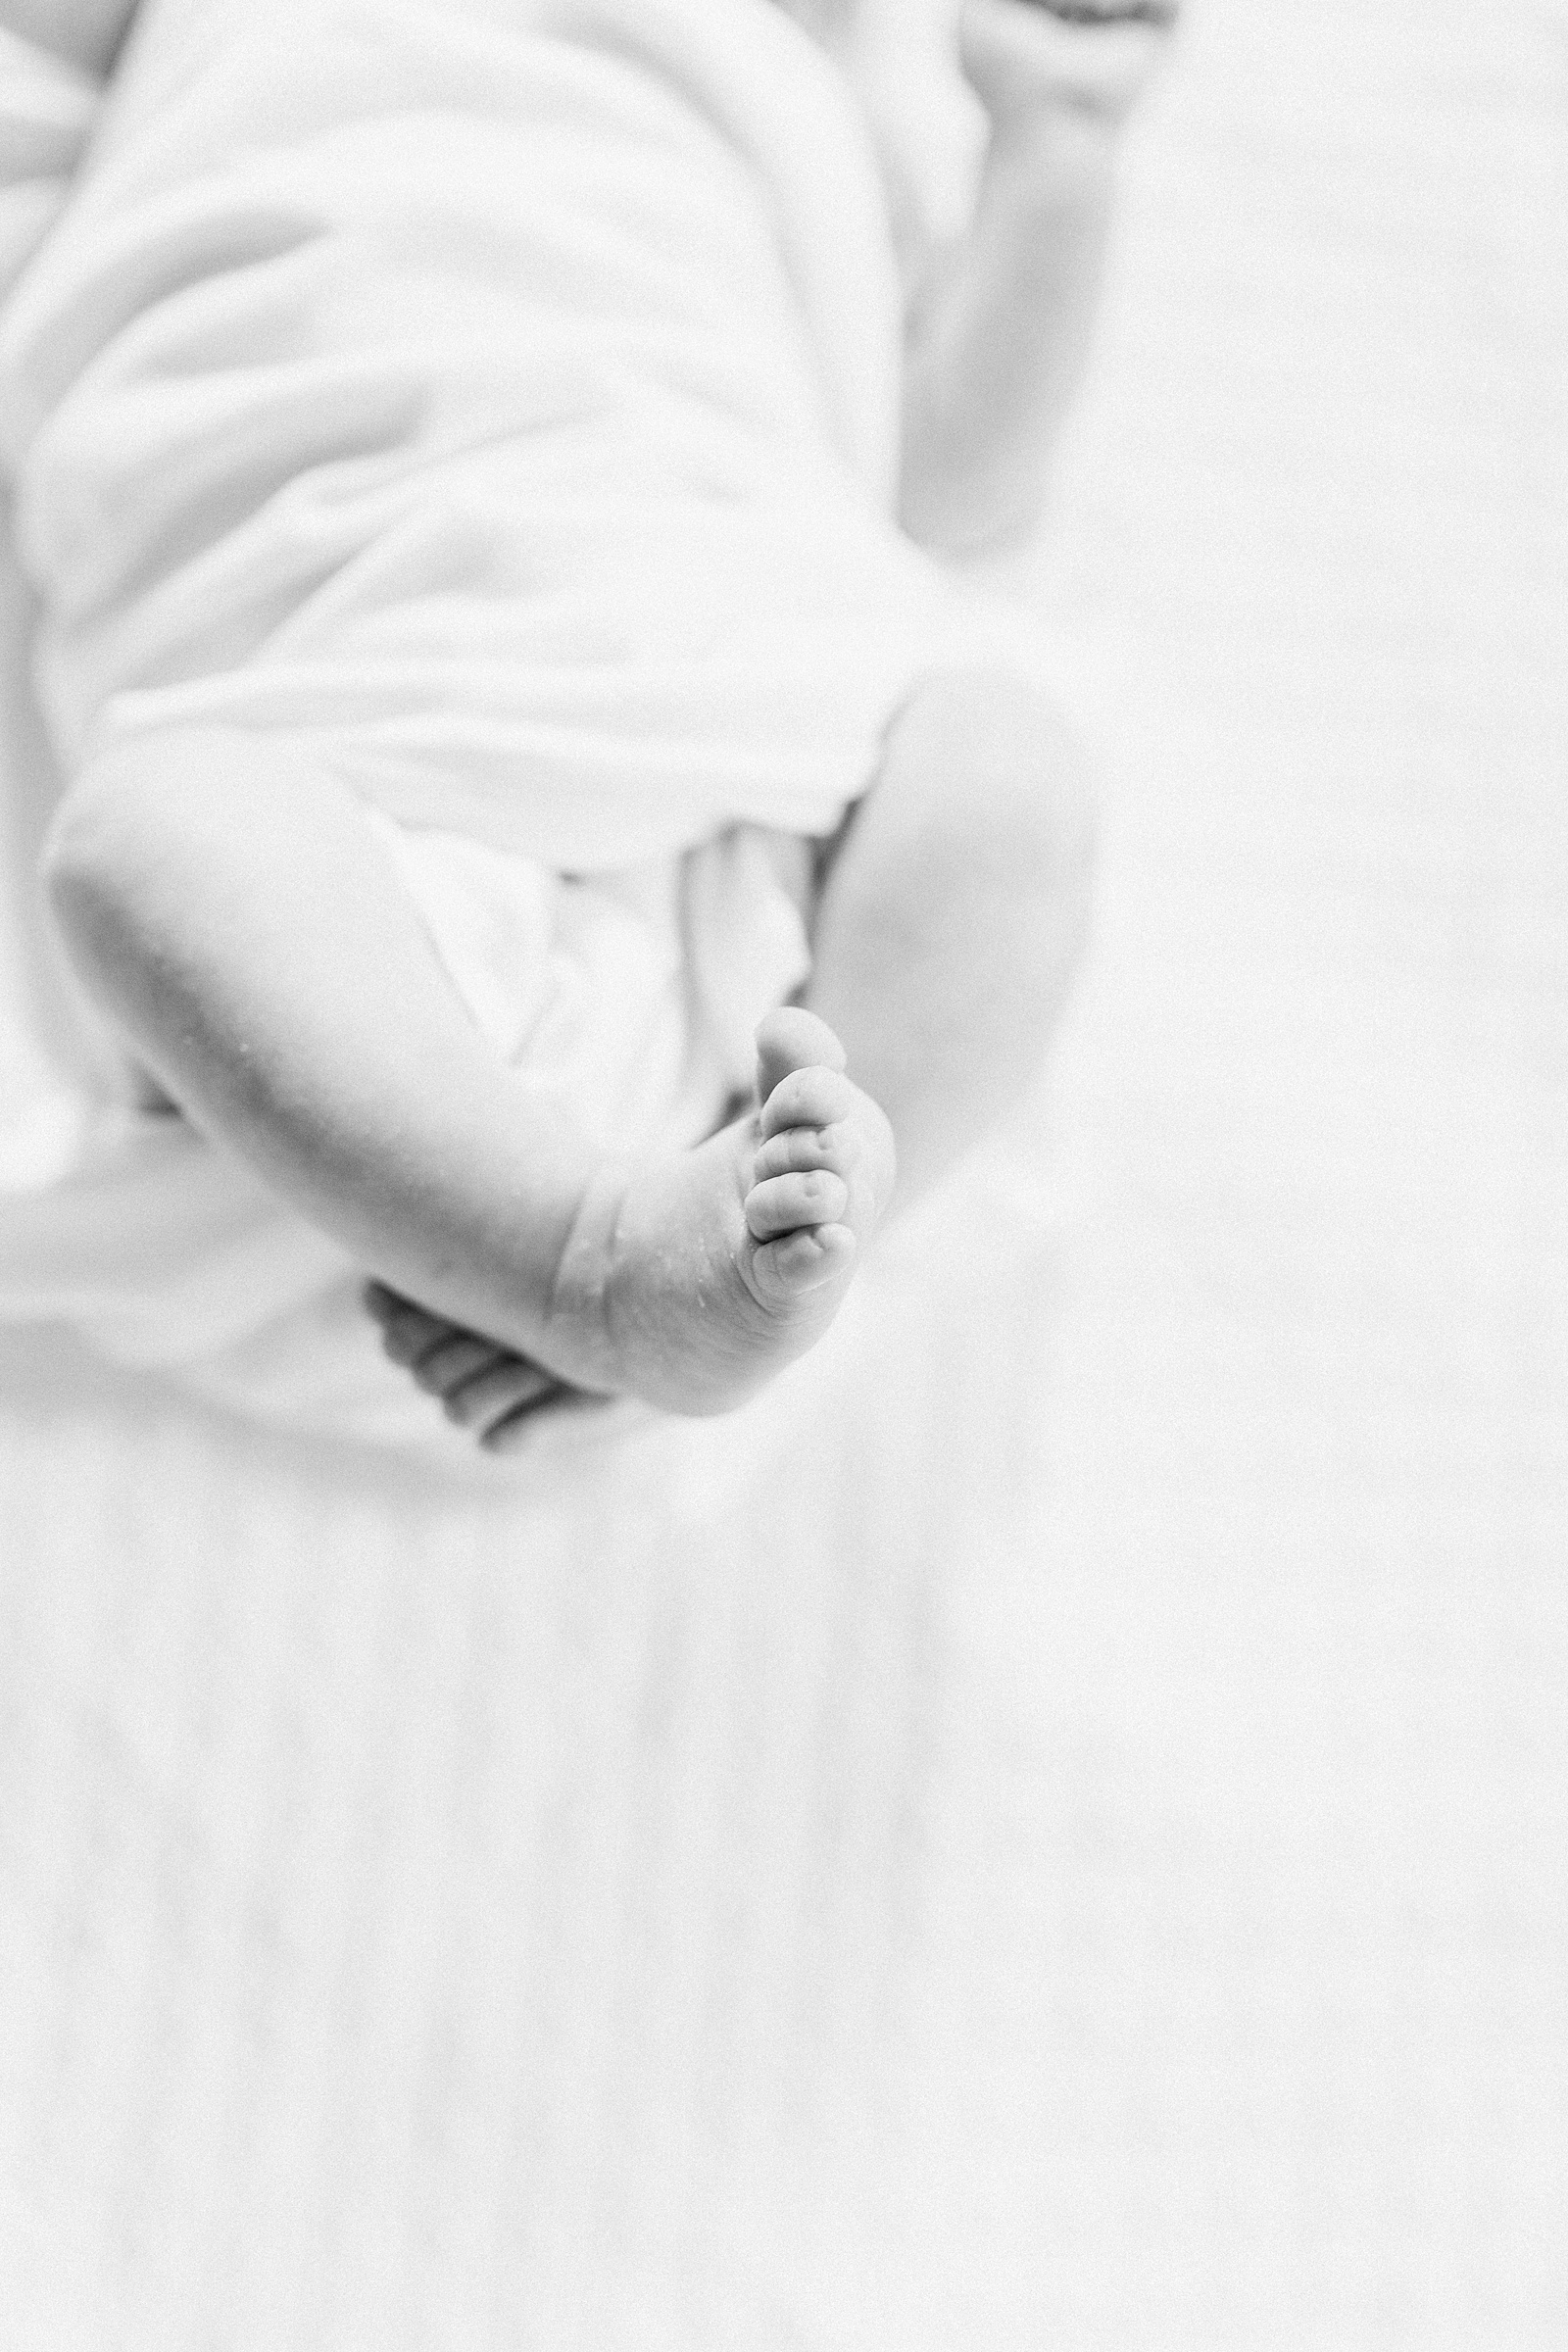 Newborn details in black and white by Charleston newborn photographer, Caitlyn Motycka Photography